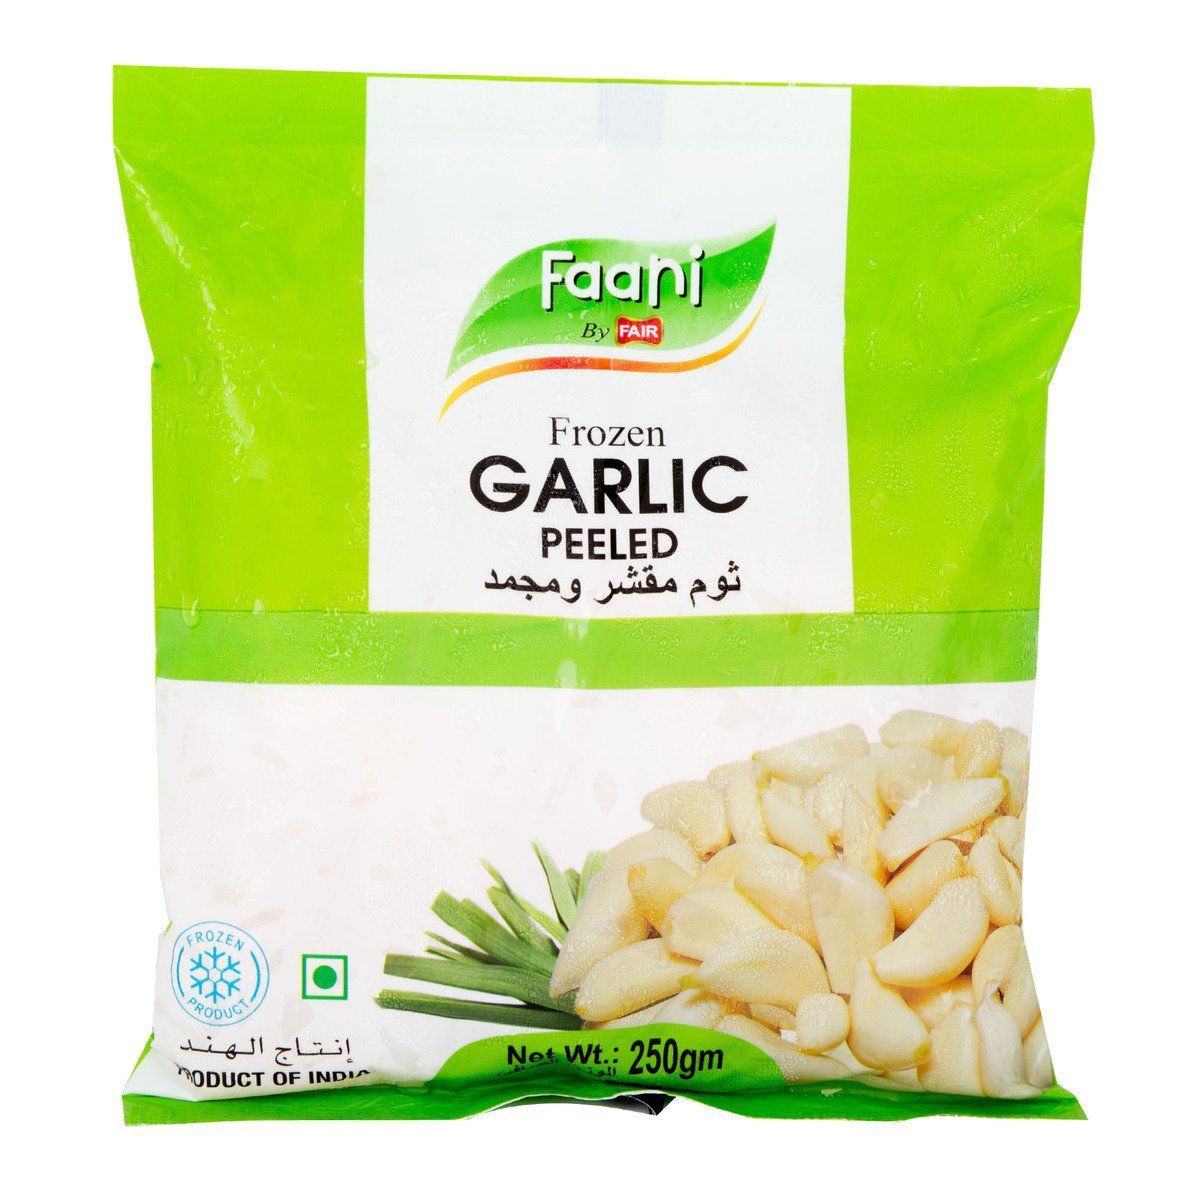 Faani Frozen Garlic Peeled 250 g